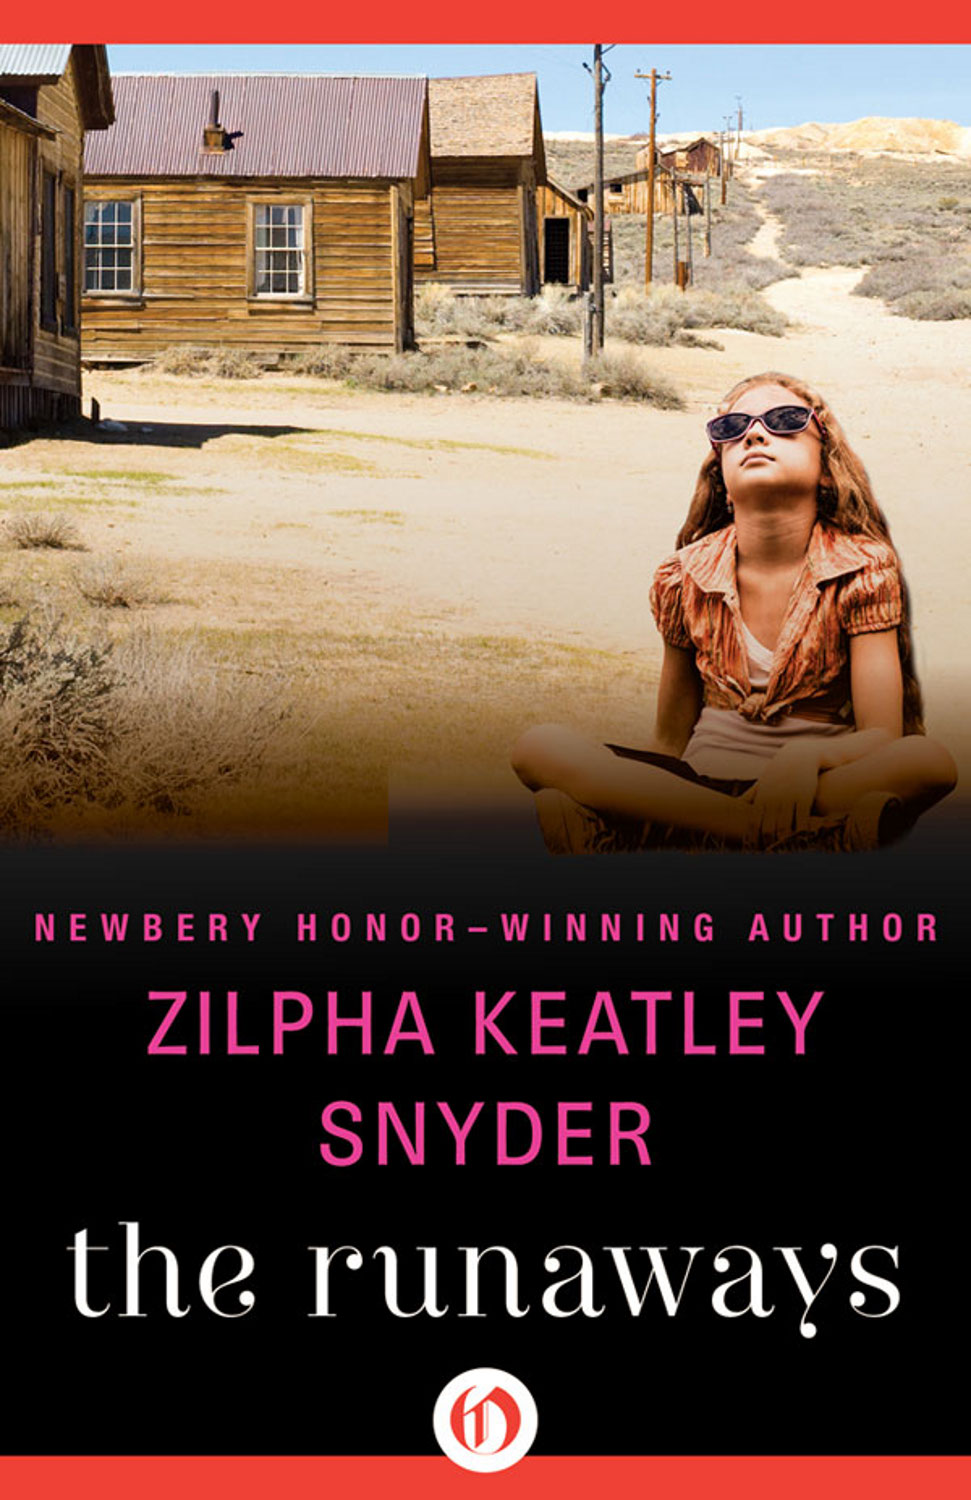 Runaways by Zilpha Keatley Snyder